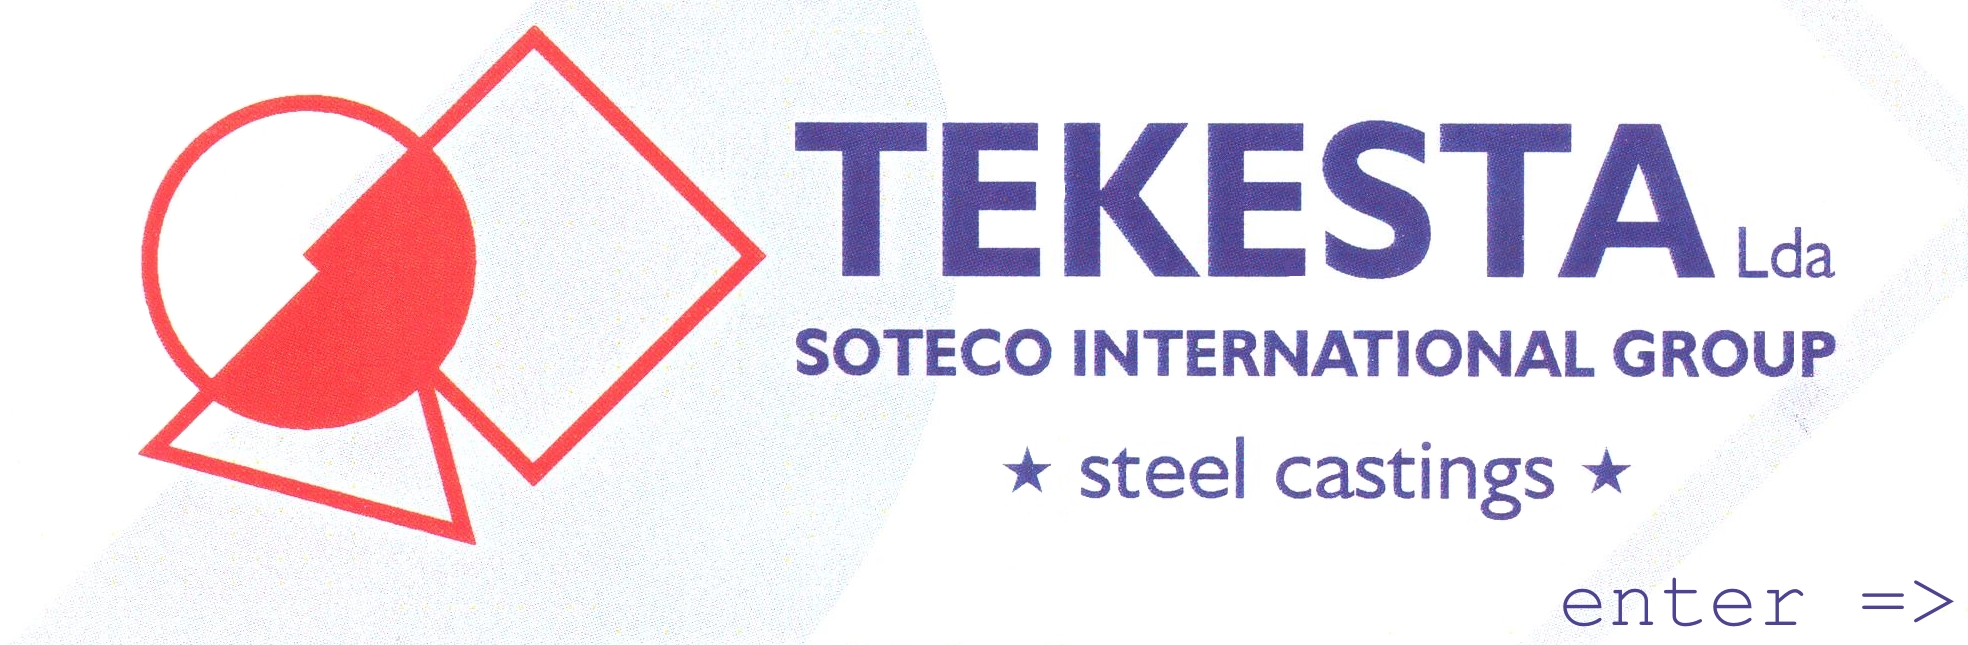 Go to web site of Tekesta Lda 